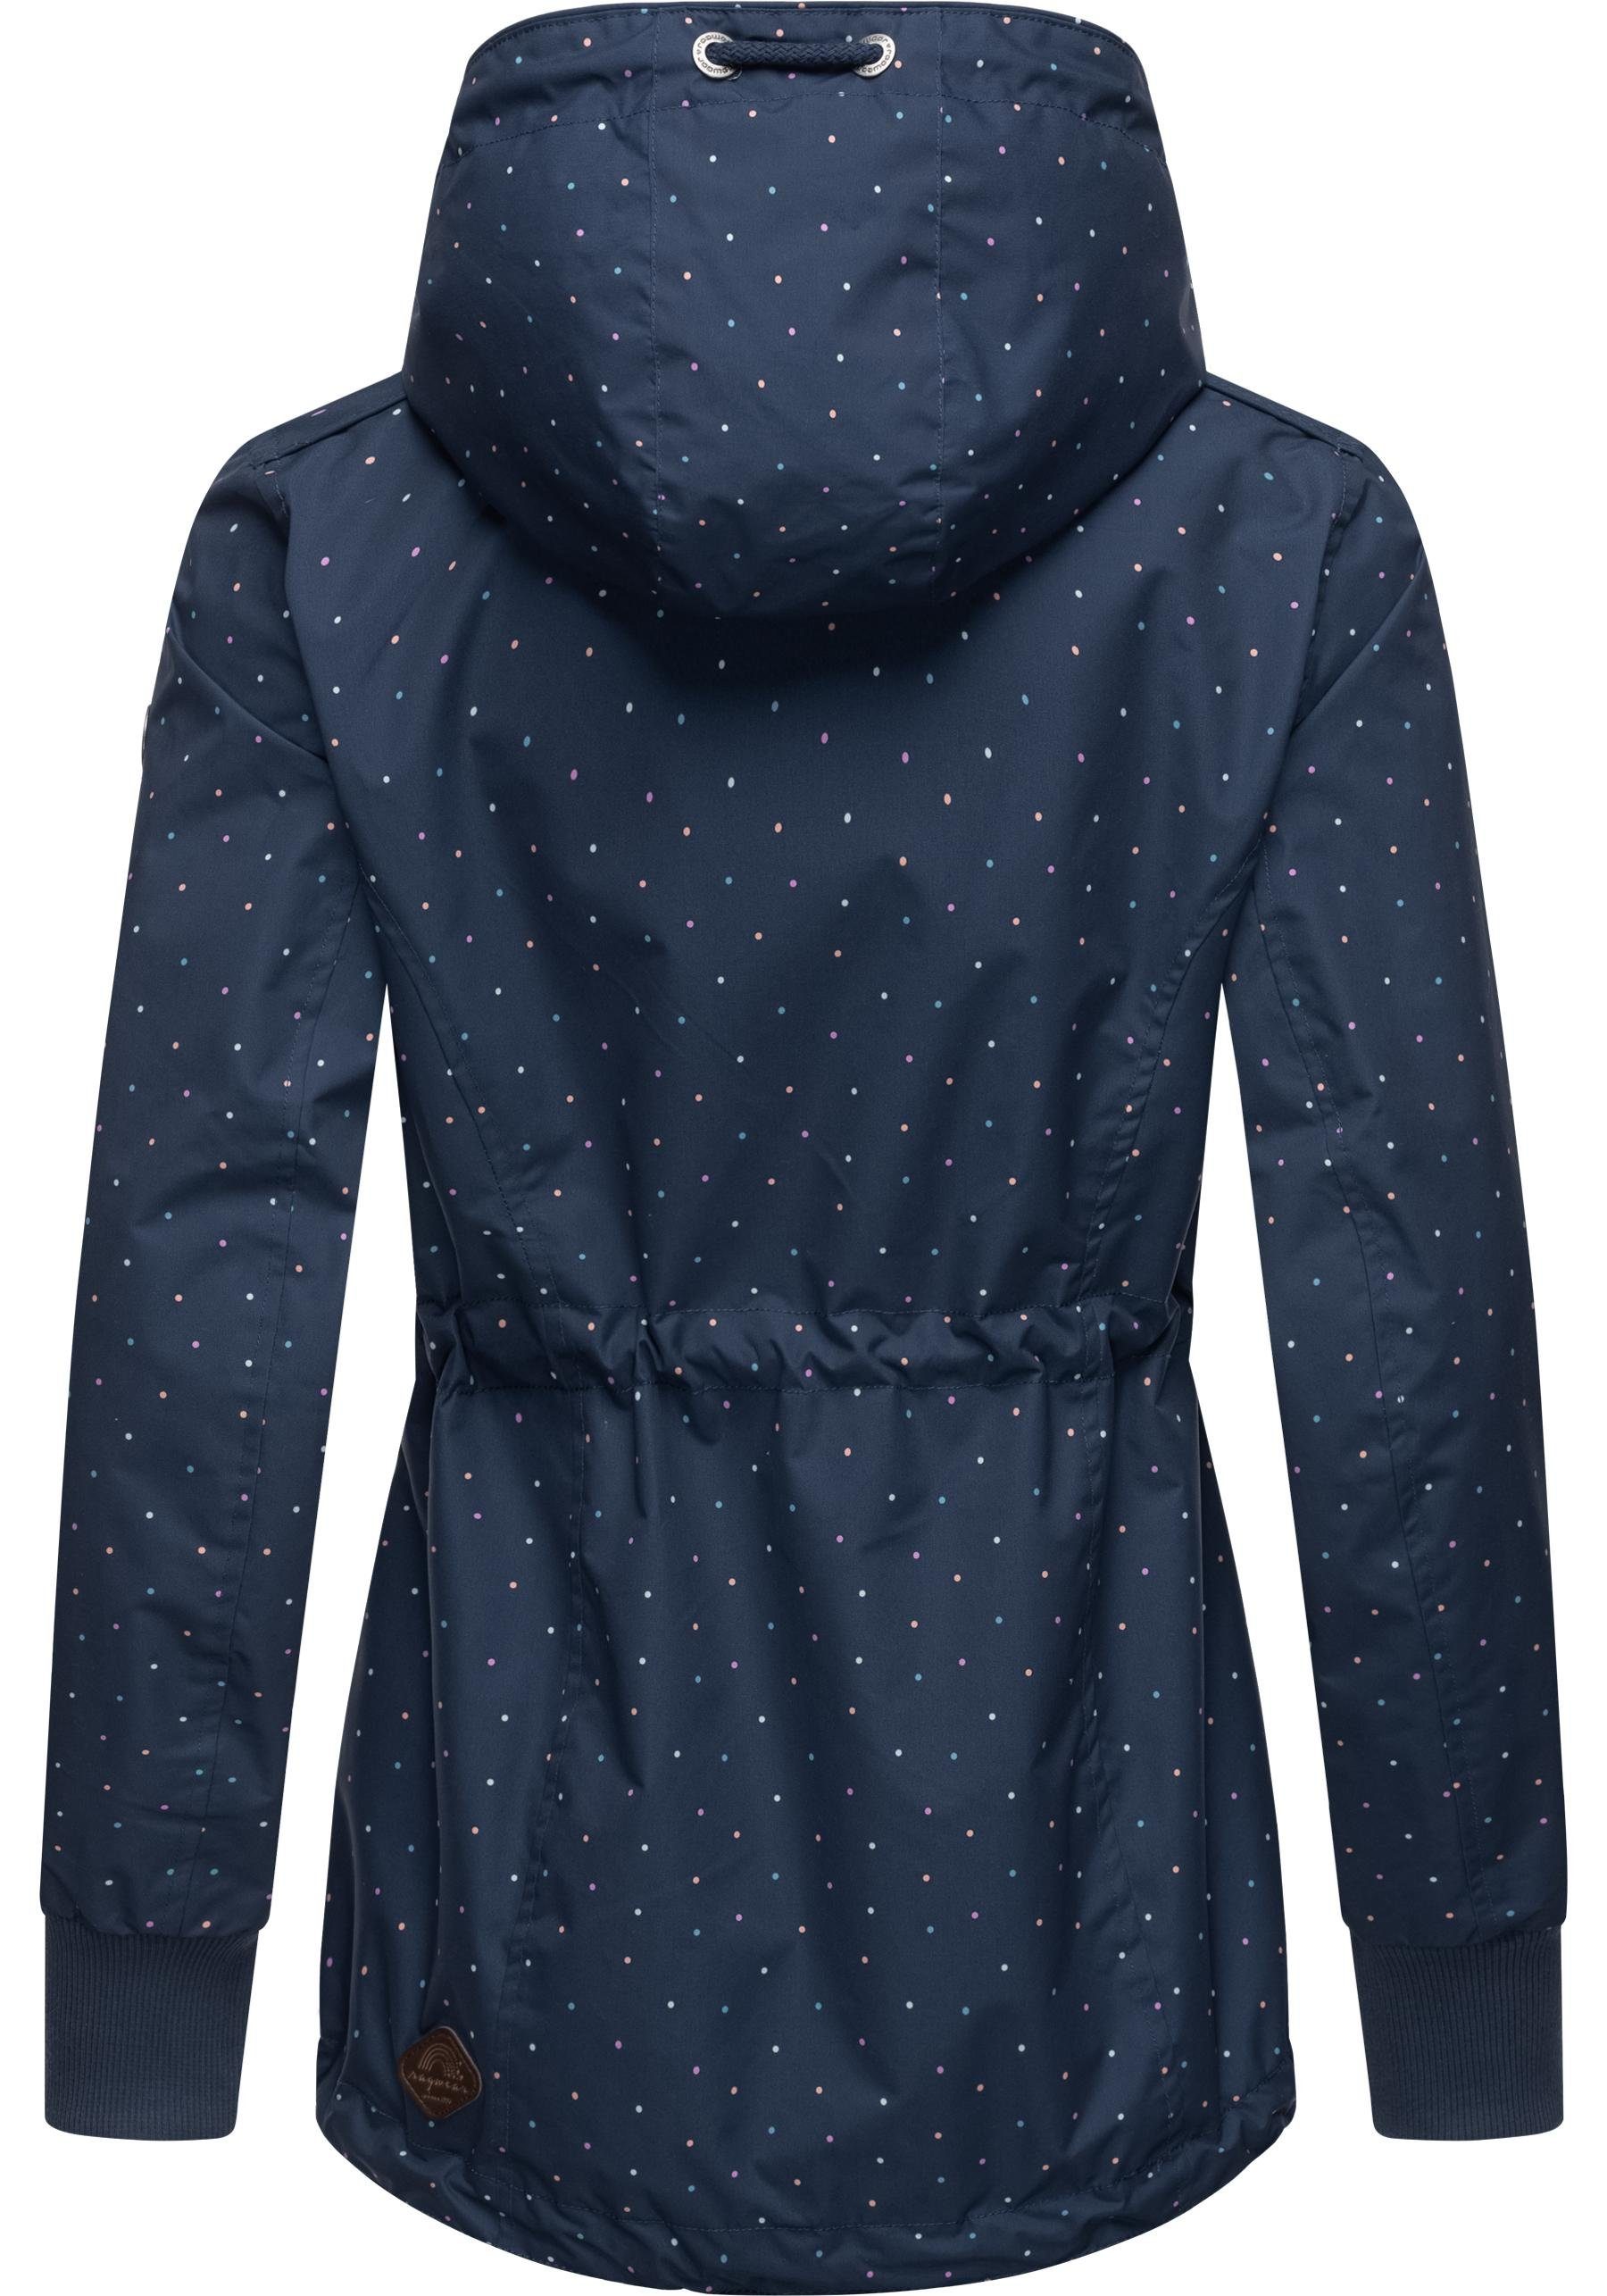 Dots Danka Übergangsjacke Ragwear Outdoorjacke indigo großer Kapuze mit stylische